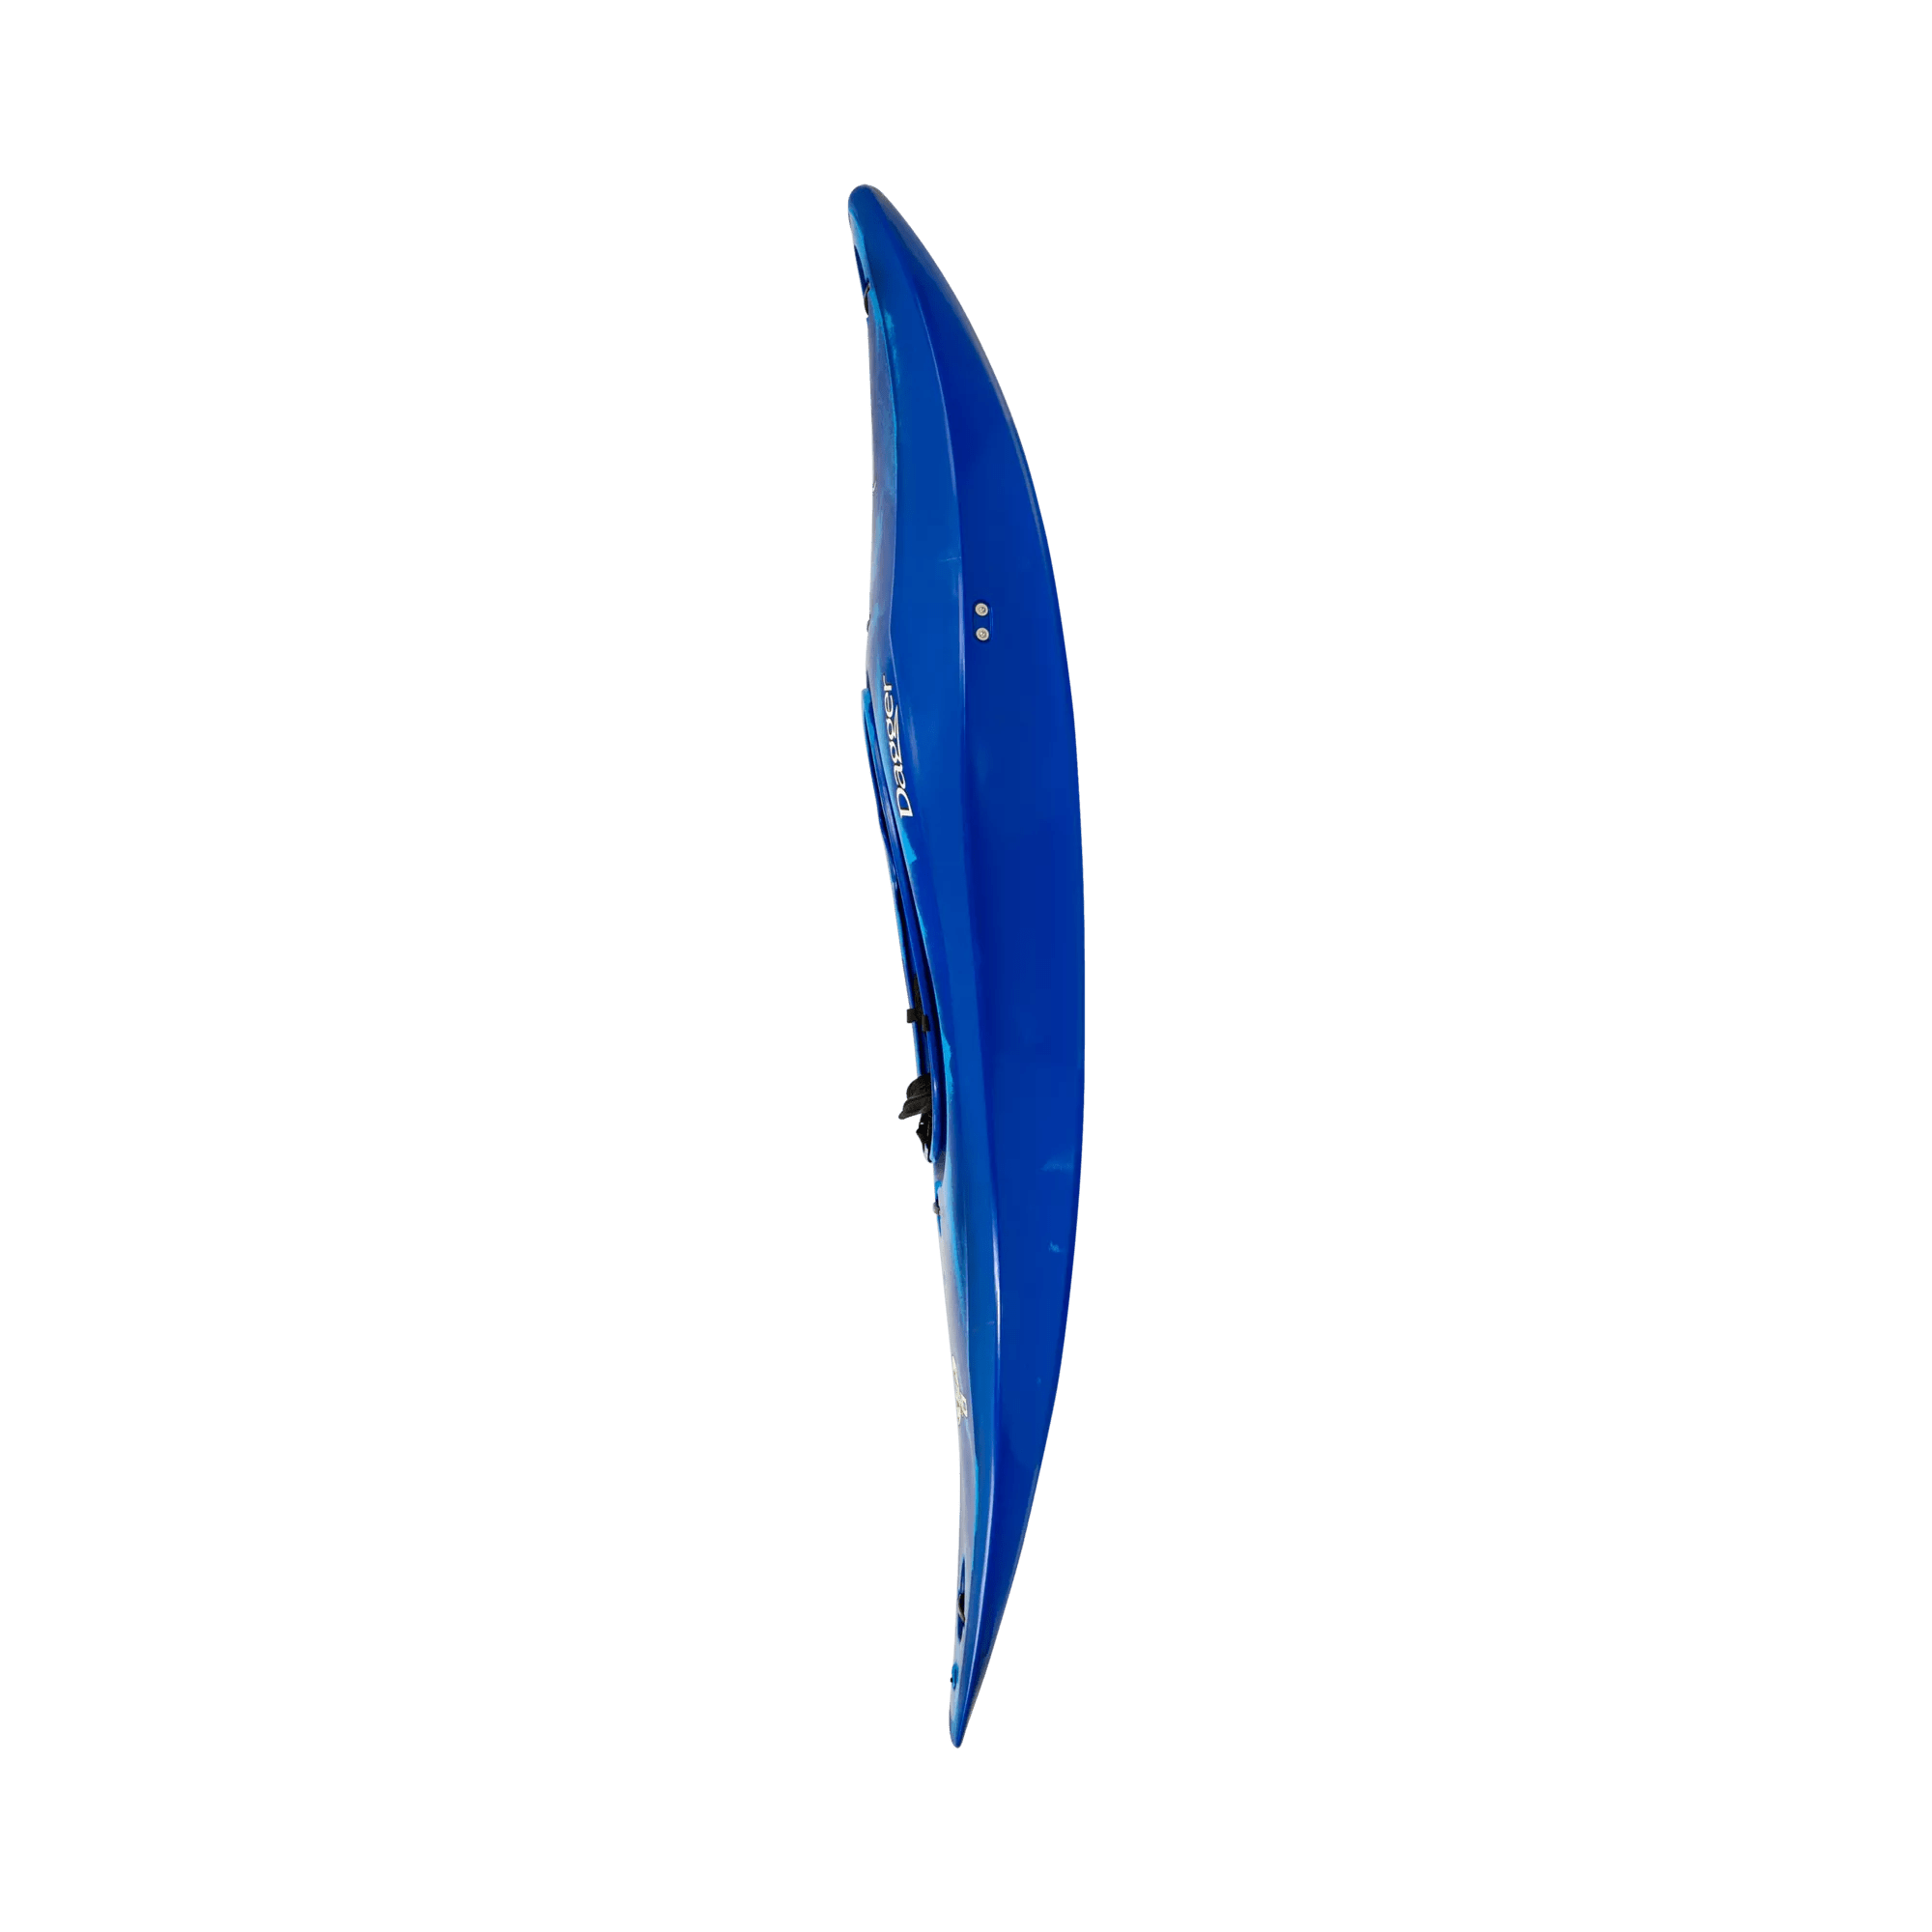 DAGGER - Rewind SM River Play Whitewater Kayak - Blue - 9010474206 - SIDE